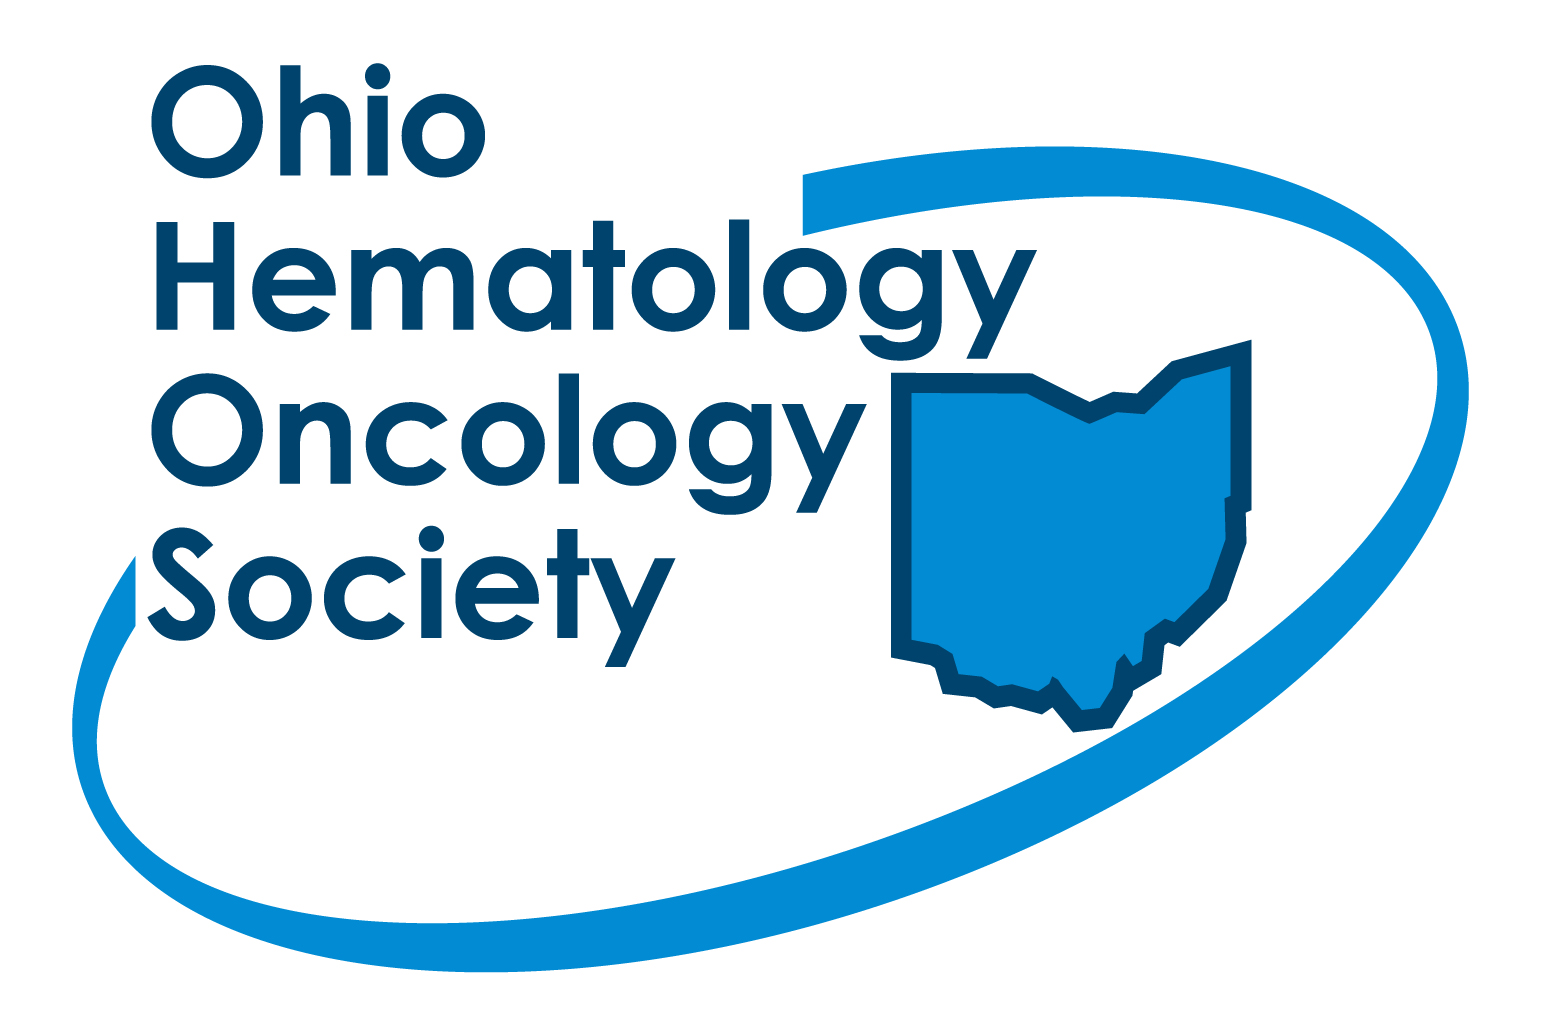 Ohio Hematology & Oncology Society